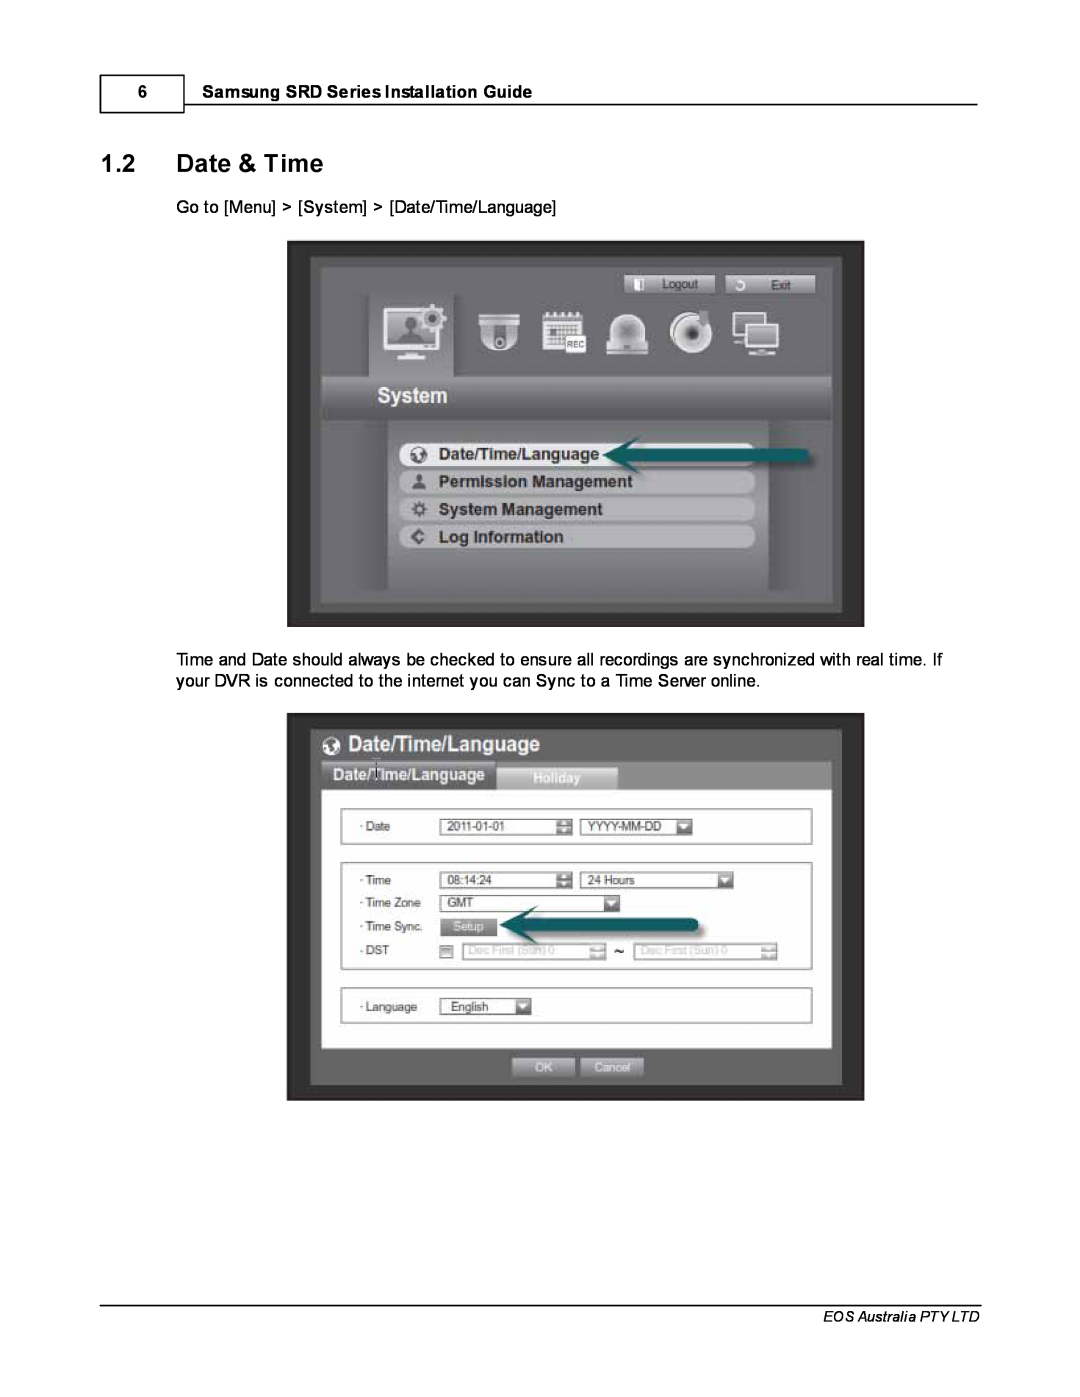 Samsung SDR4200 manual 1.2Date & Time, Samsung SRD Series Installation Guide 